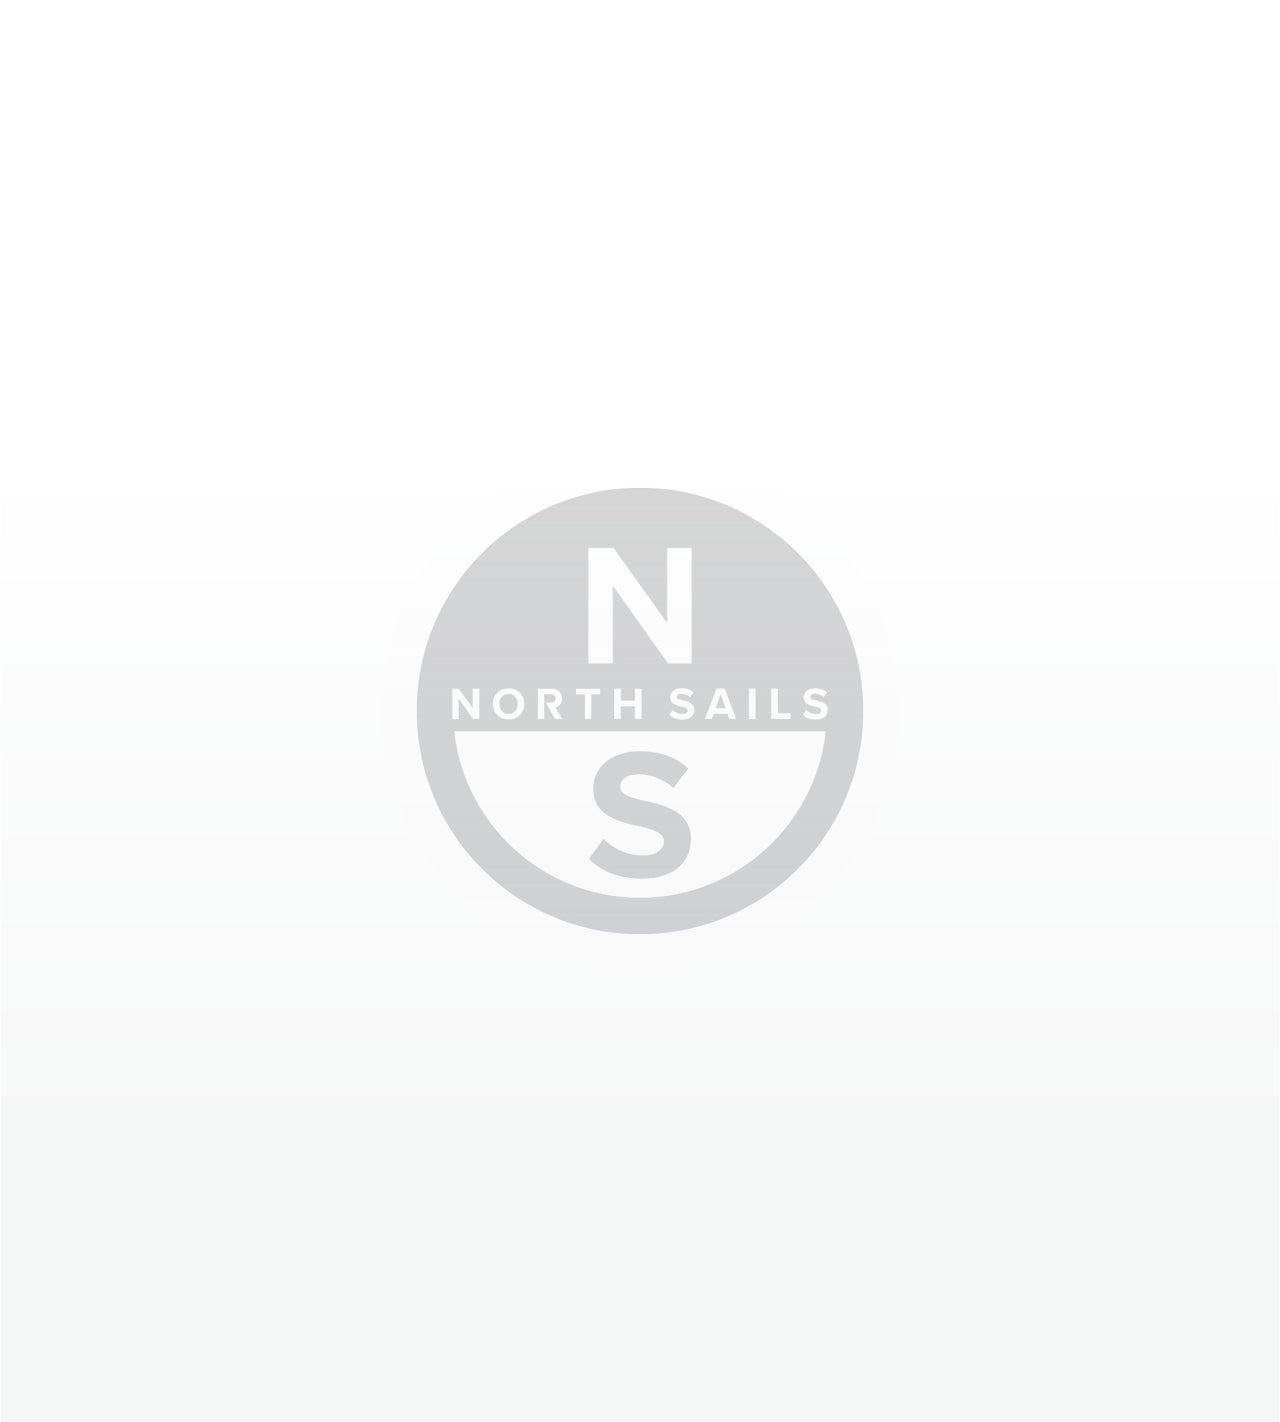 North Sails Dinghy 12 D-14 Mainsail